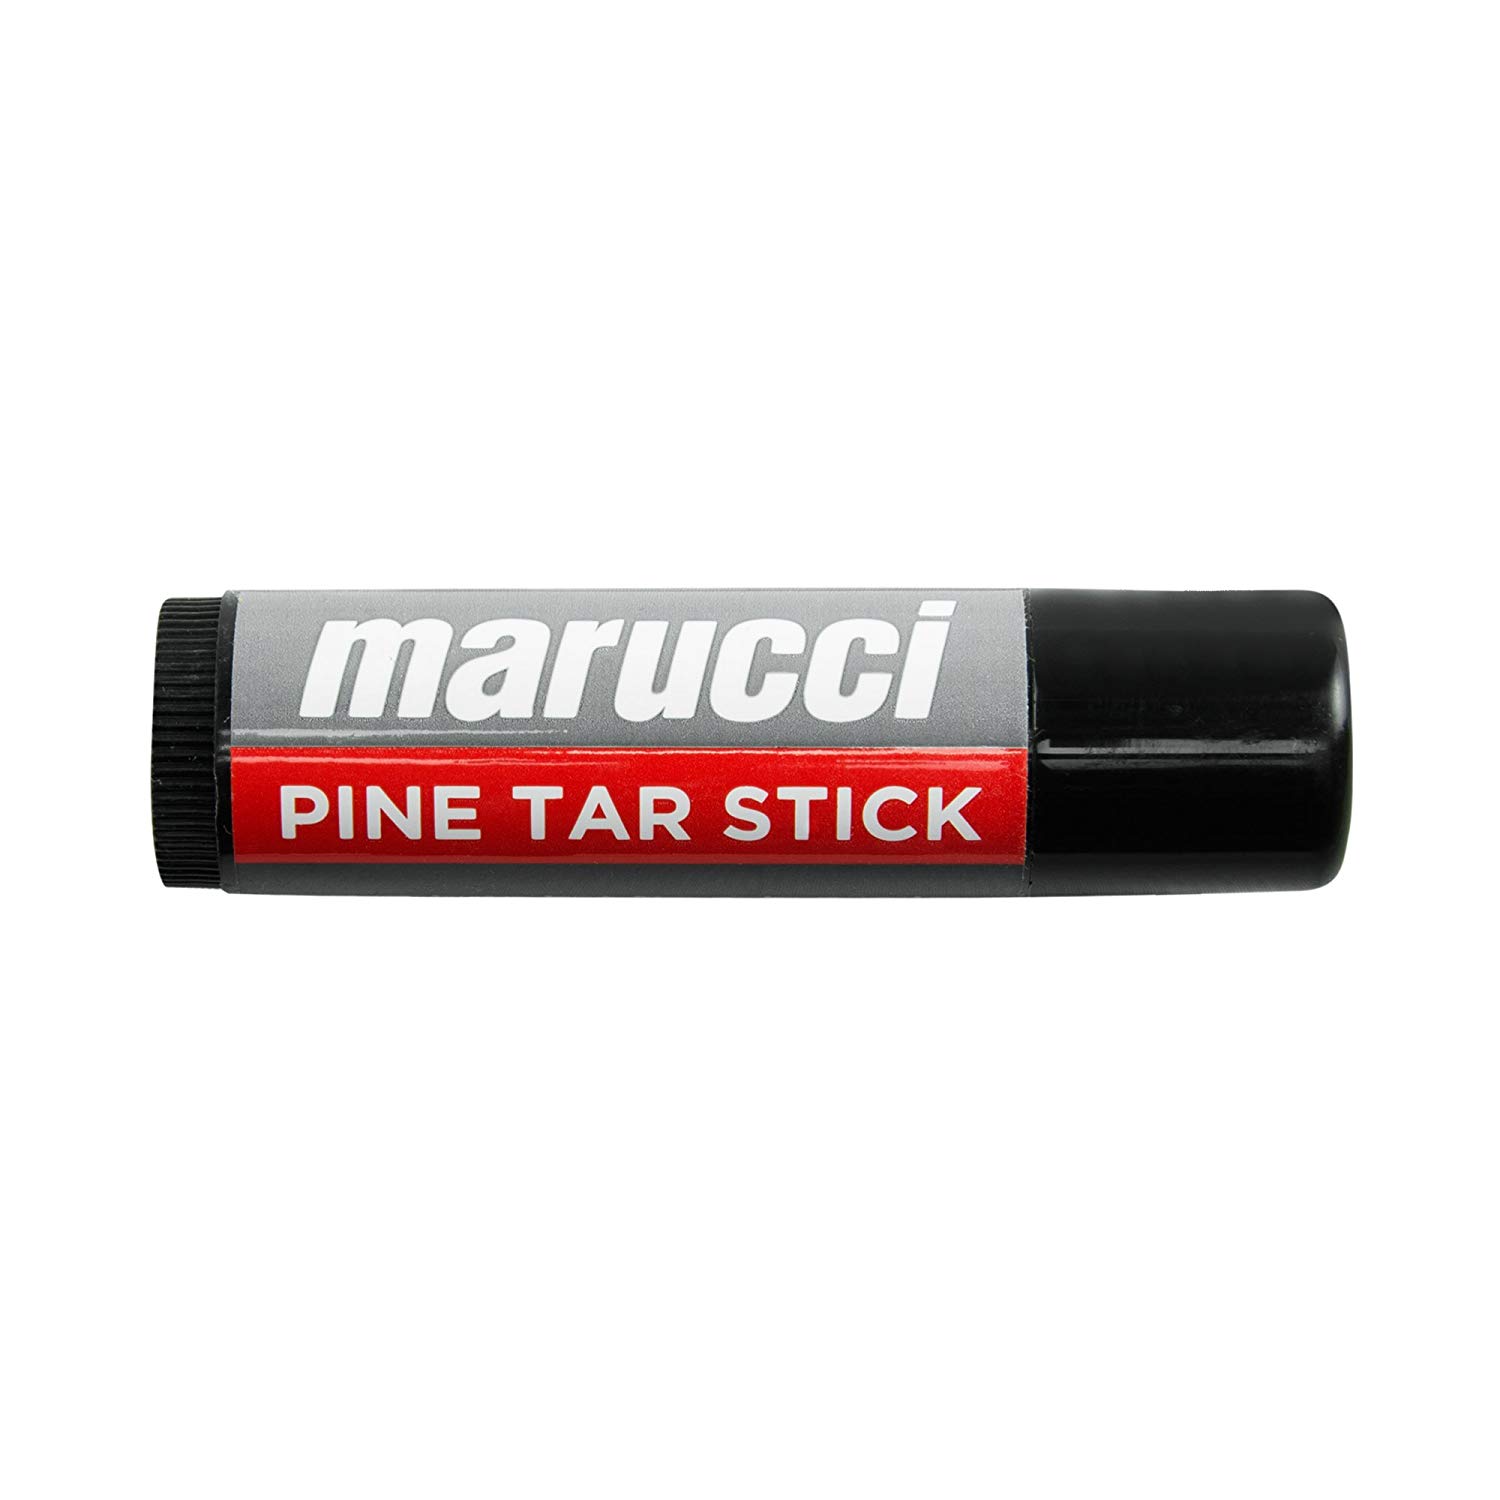 marucci-pine-tar-stick MPINESTK Marucci 849817033753  Big league-preferred grip enhancer 2 oz. Tube is over 3x larger